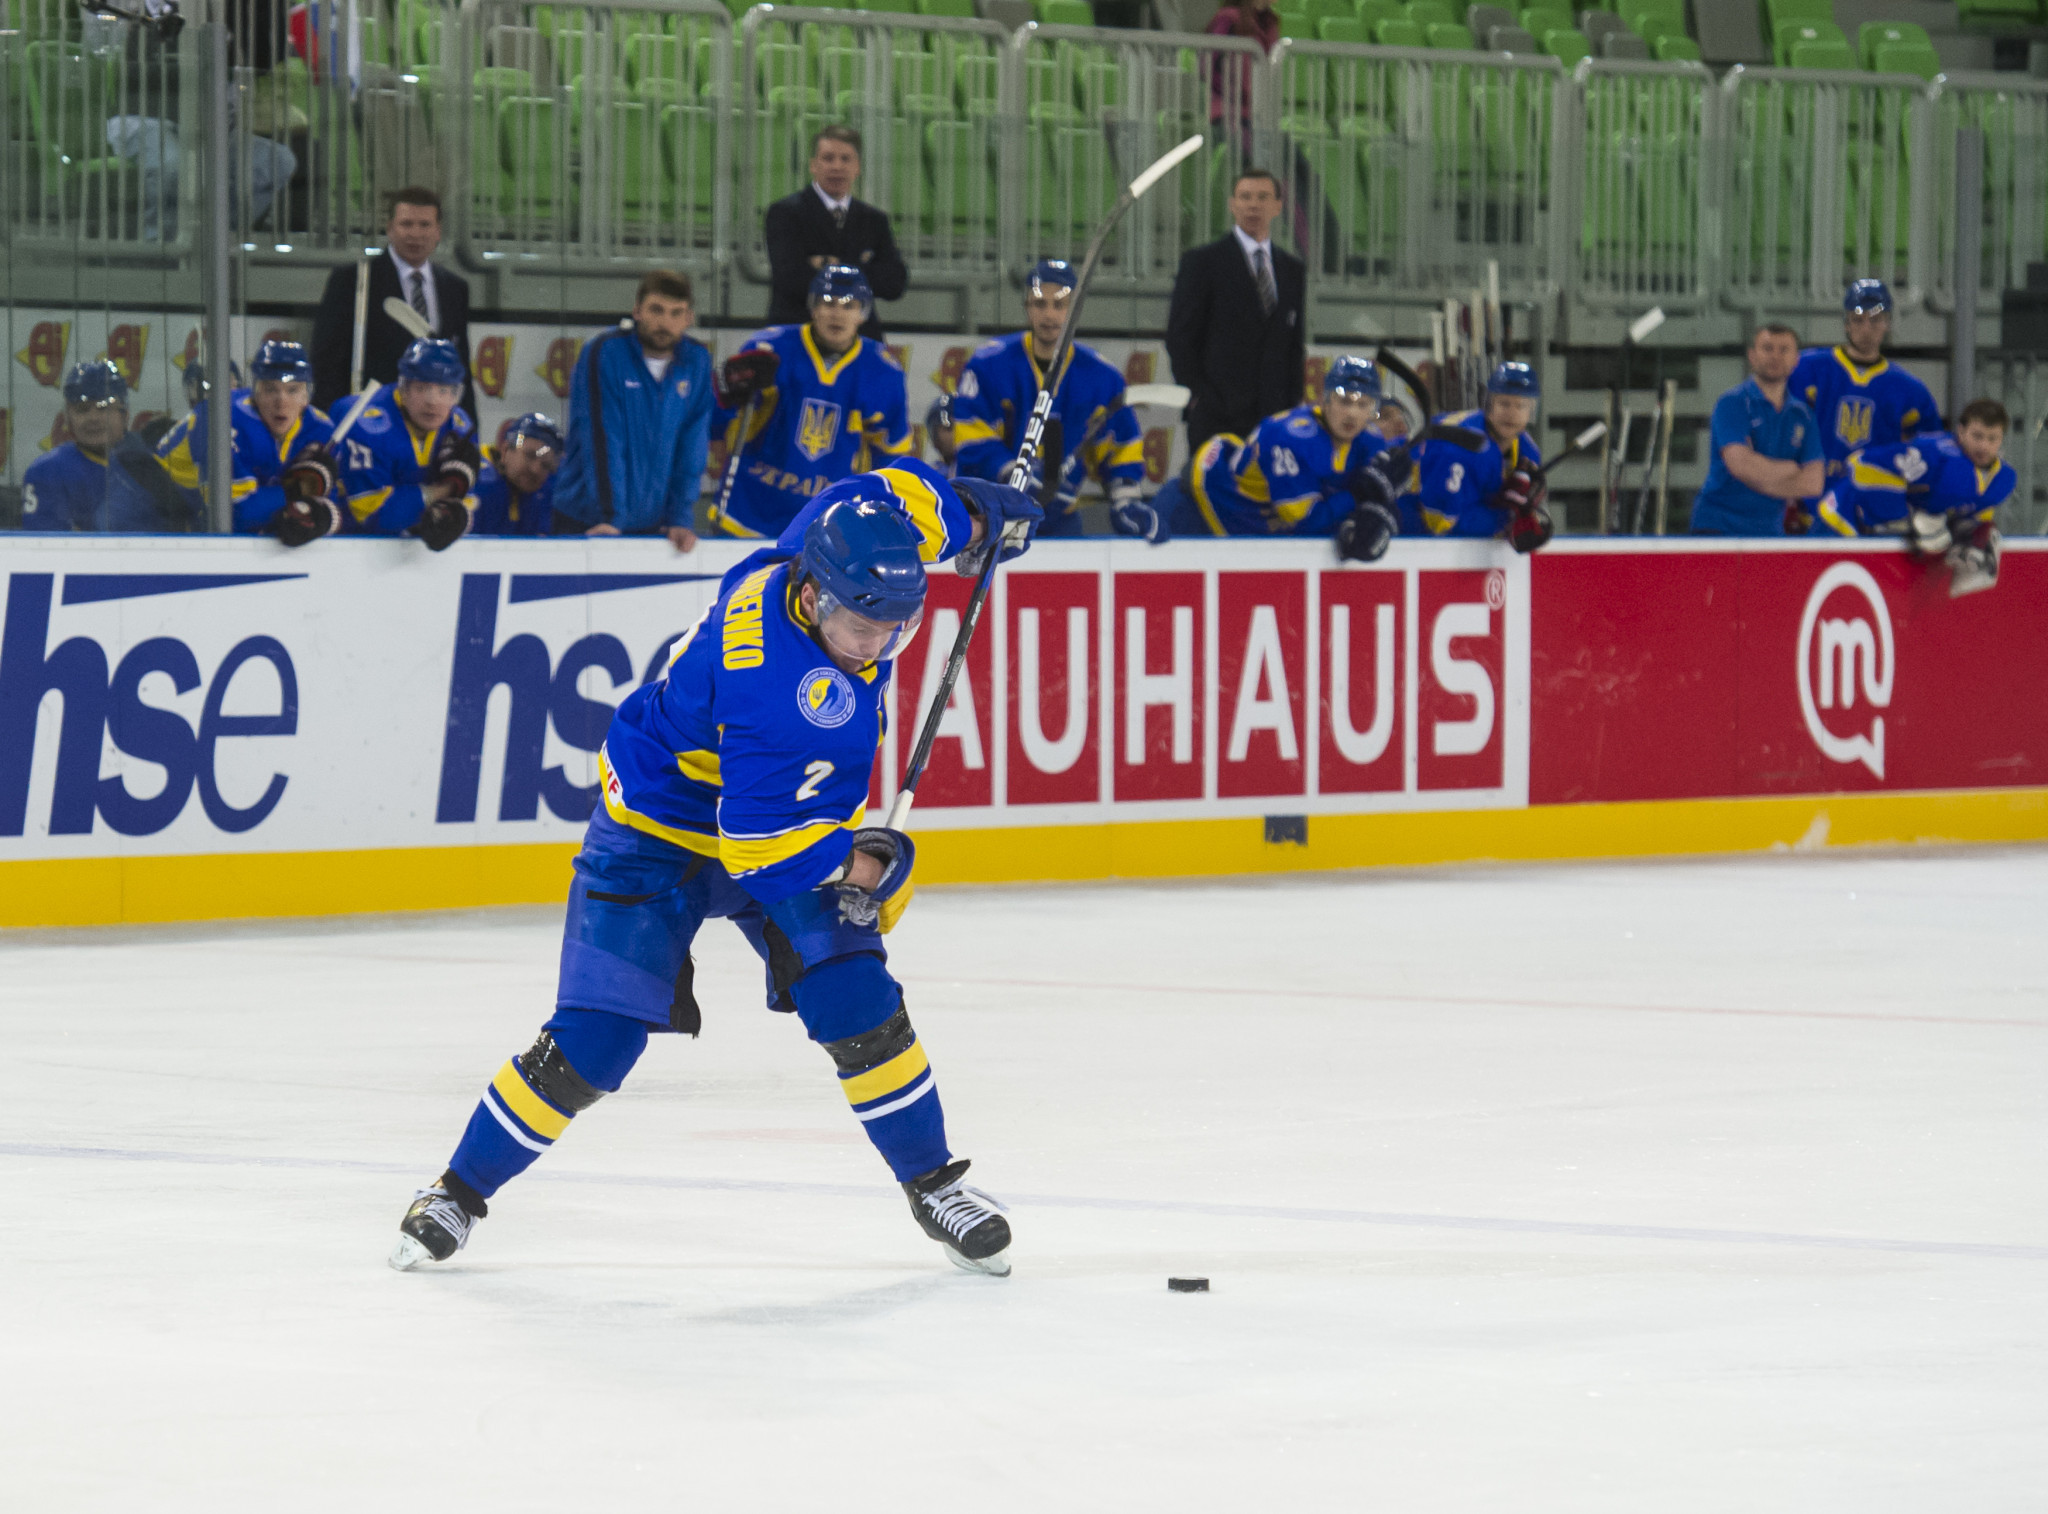 Hungary and Ukraine set to play fundraising exhibition ice hockey match